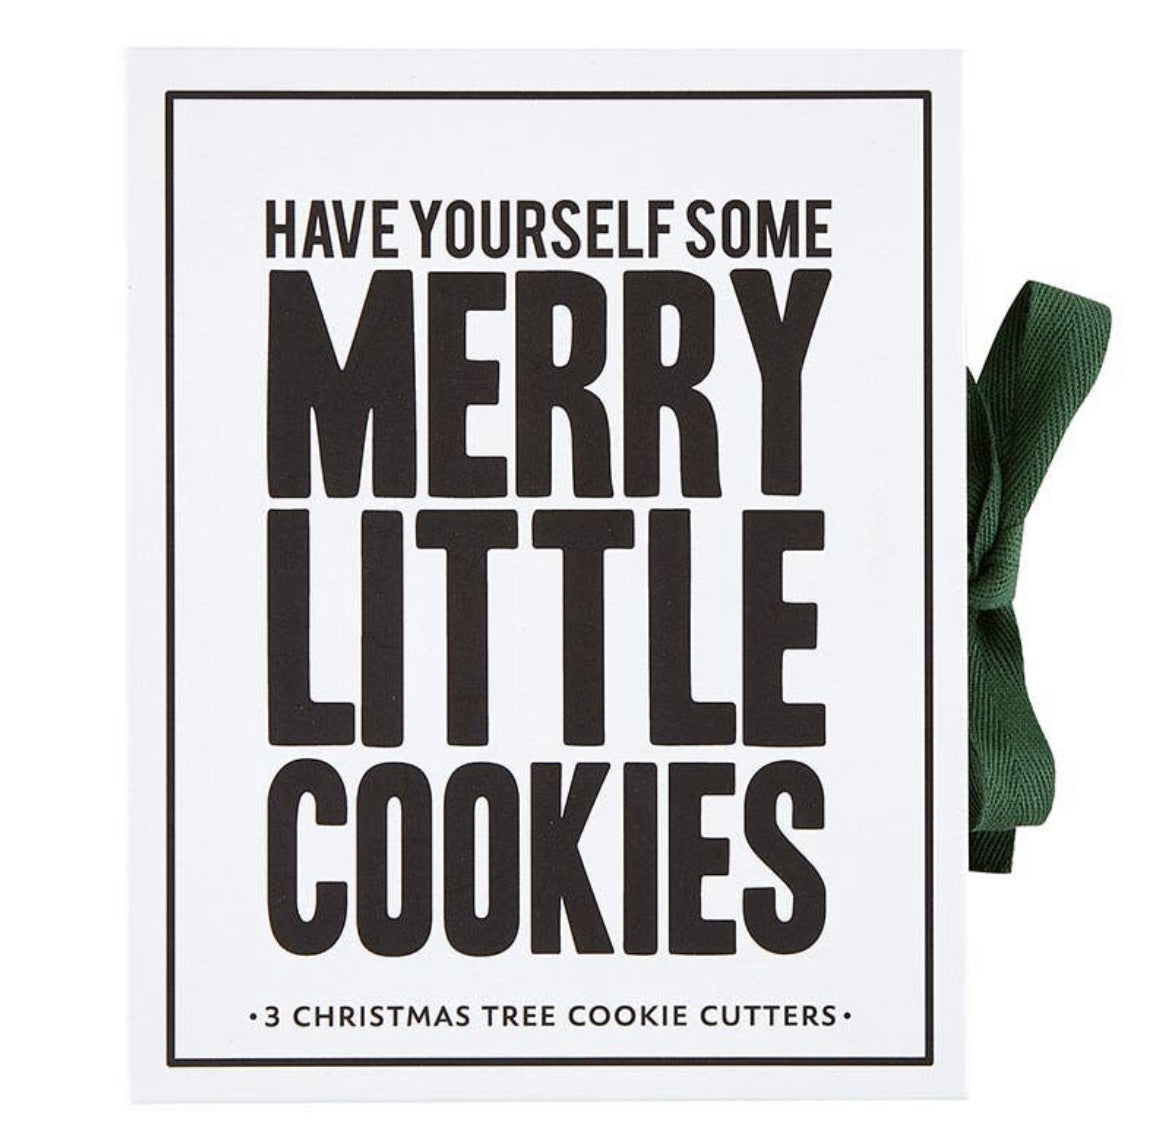 Merry Little Christmas Cookies